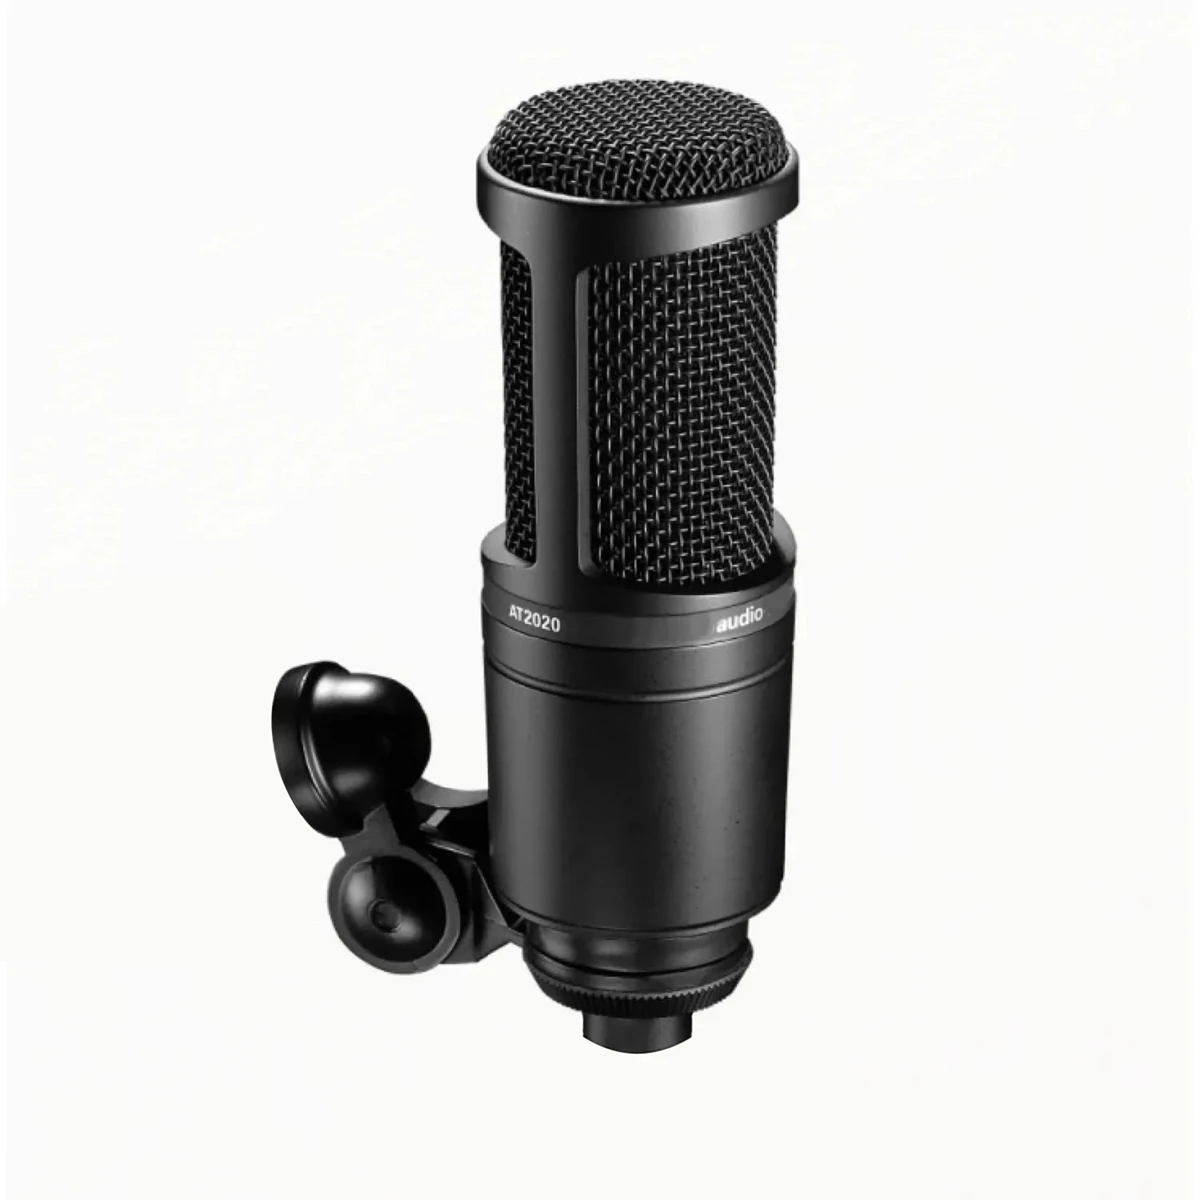 Avdio AT2020 Cardioid Kondenzatorski Mikrofon 20-20000Hz Tri Pin XLRM Moški Mikrofon za Snemanje Sidro Karaoke MIC - 1